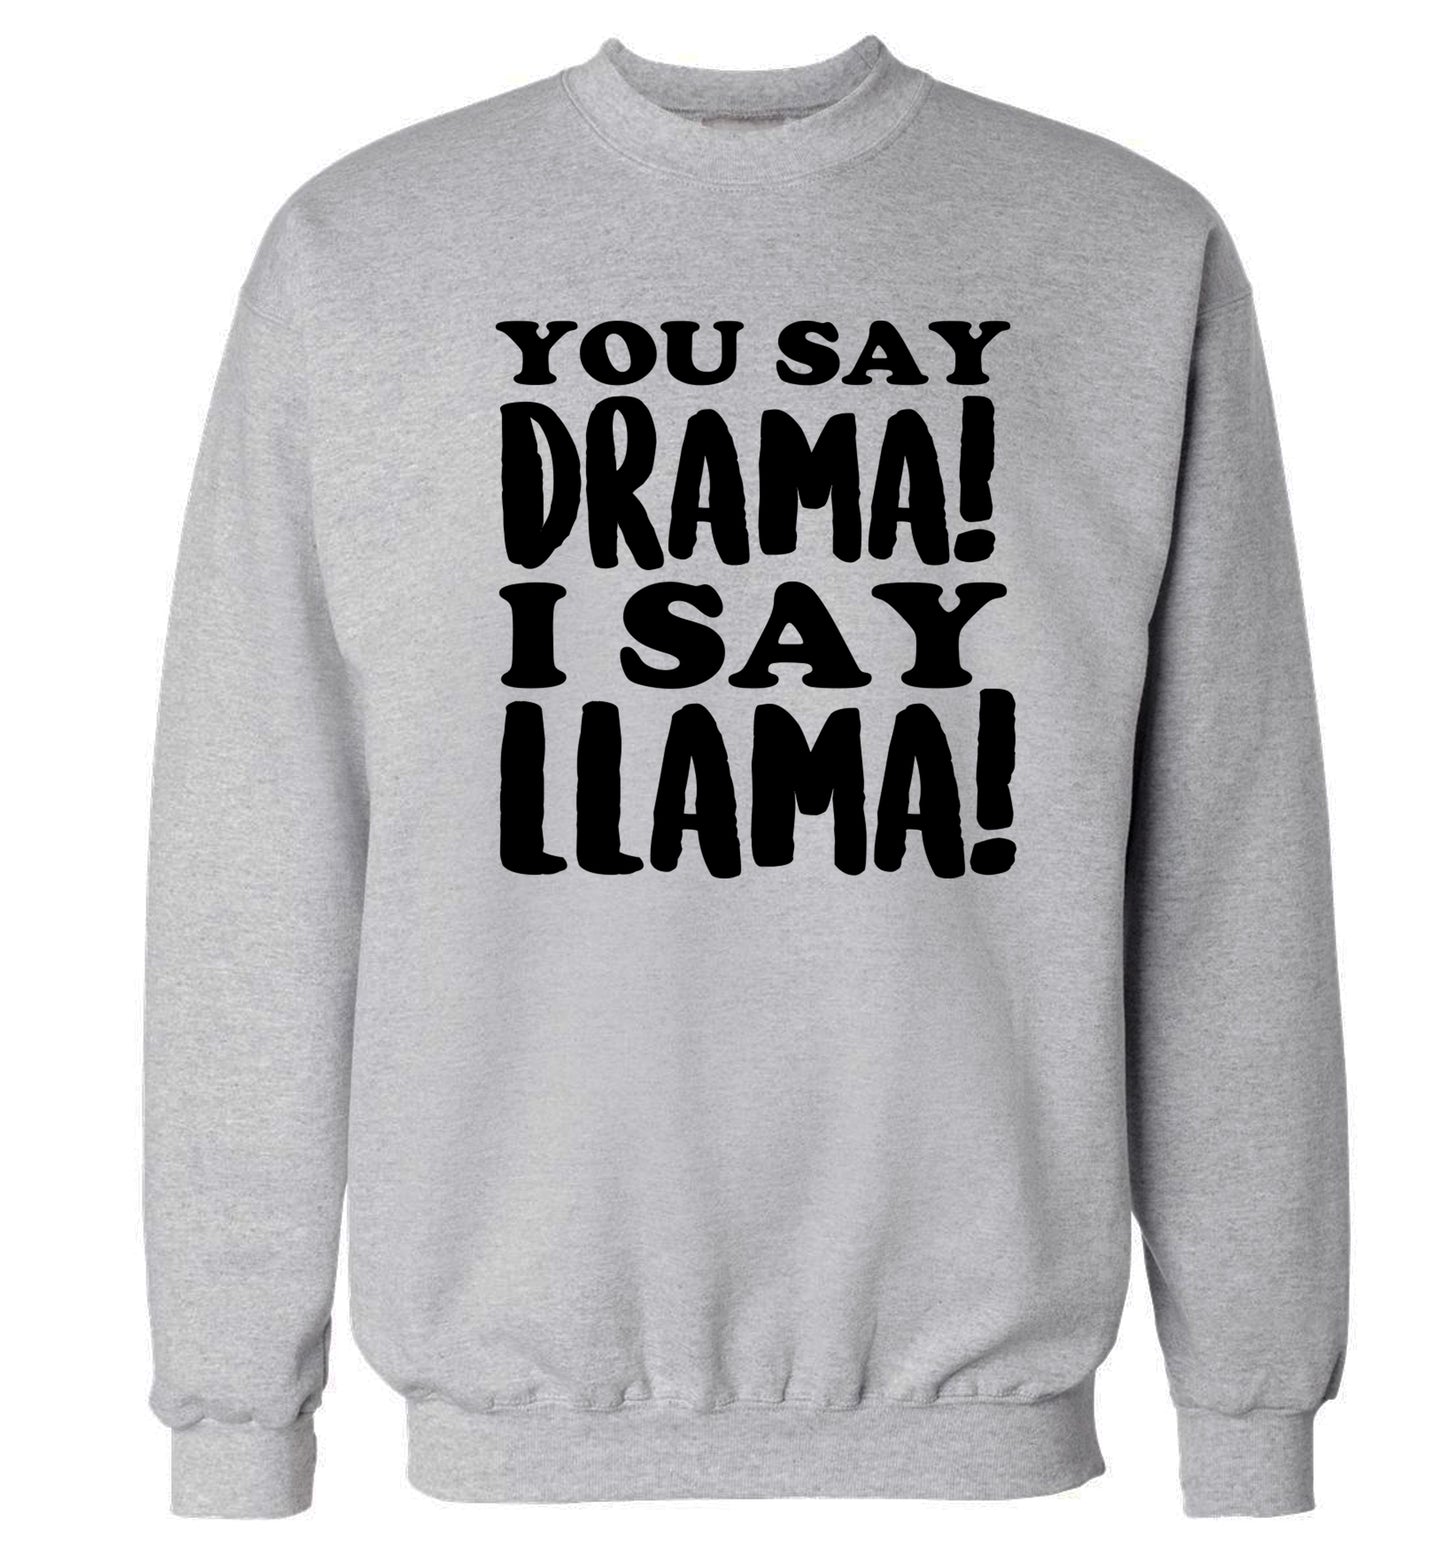 You say drama I say llama! Adult's unisex grey Sweater 2XL